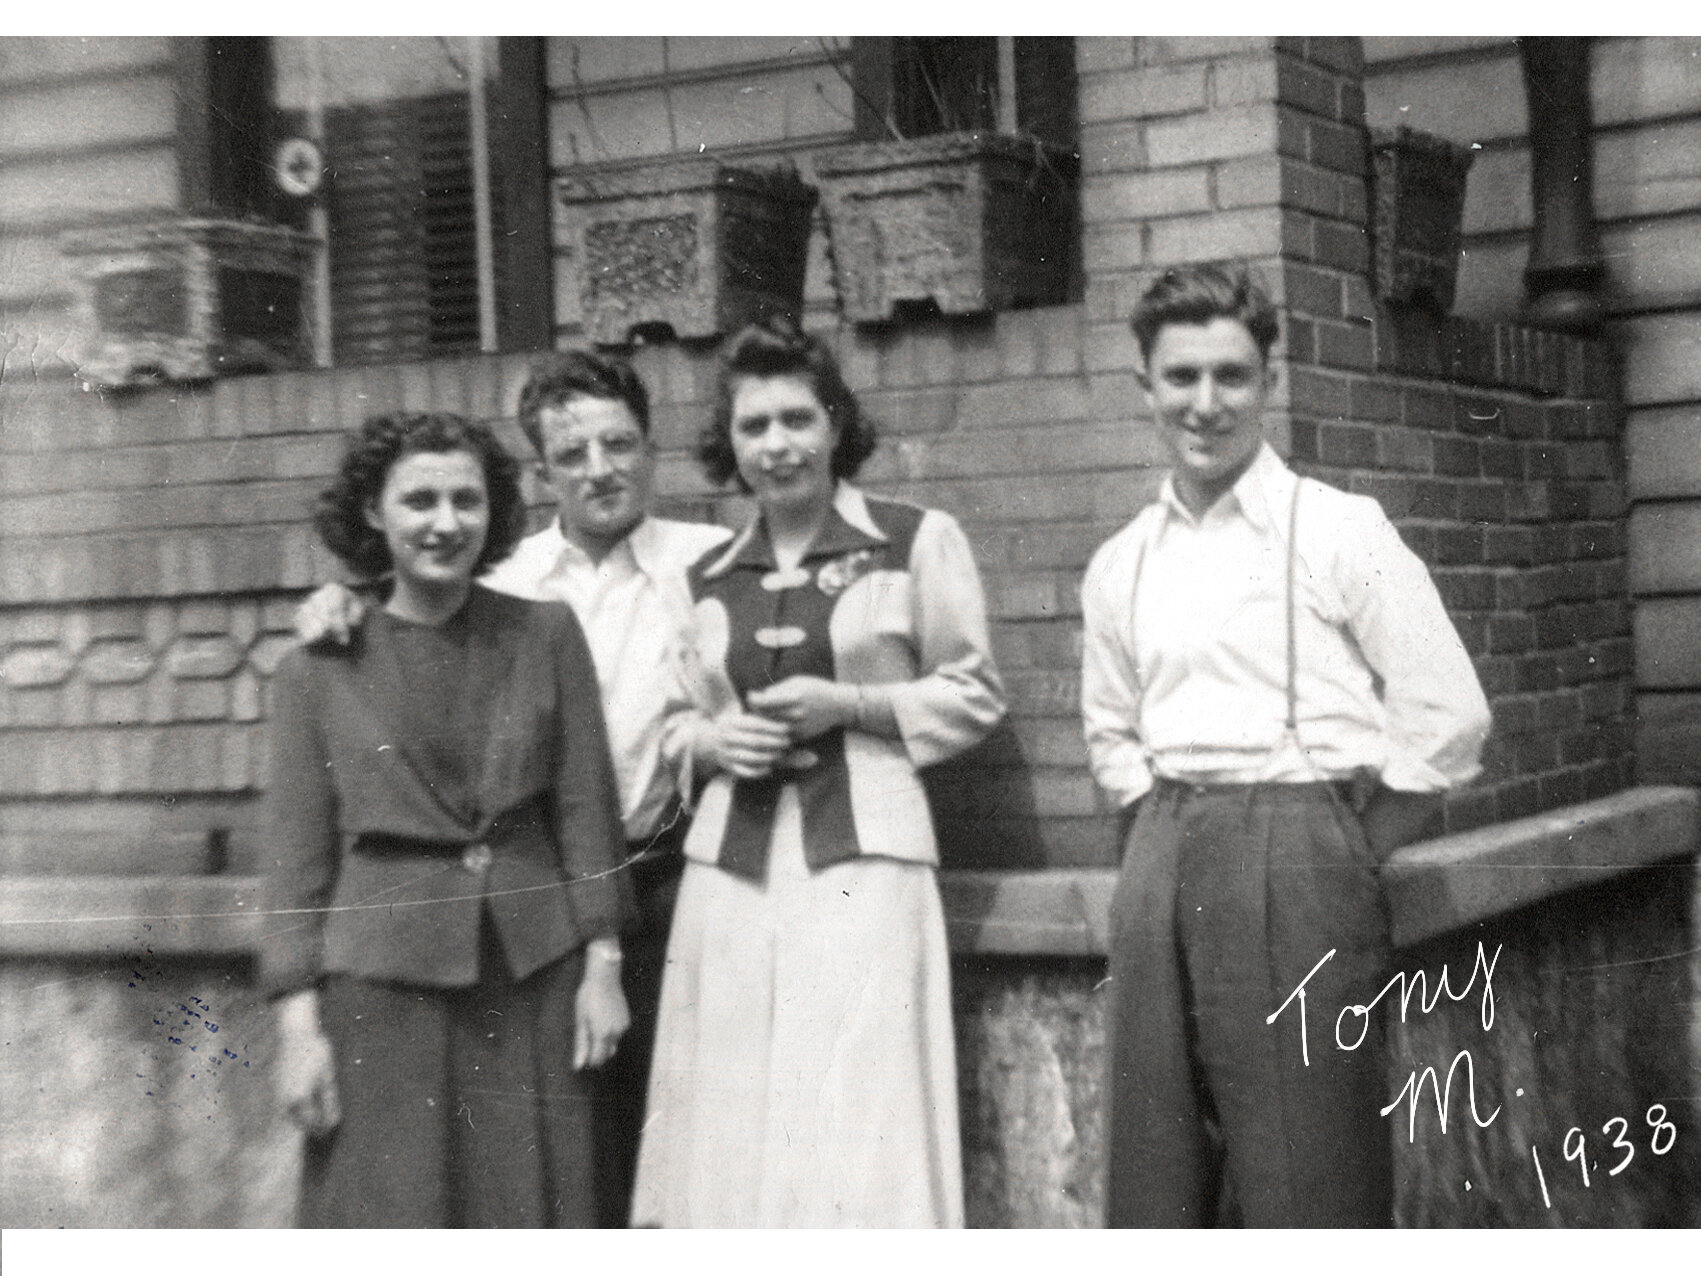 Tony (right), Joe and neighborhood friends (left) circa 1938